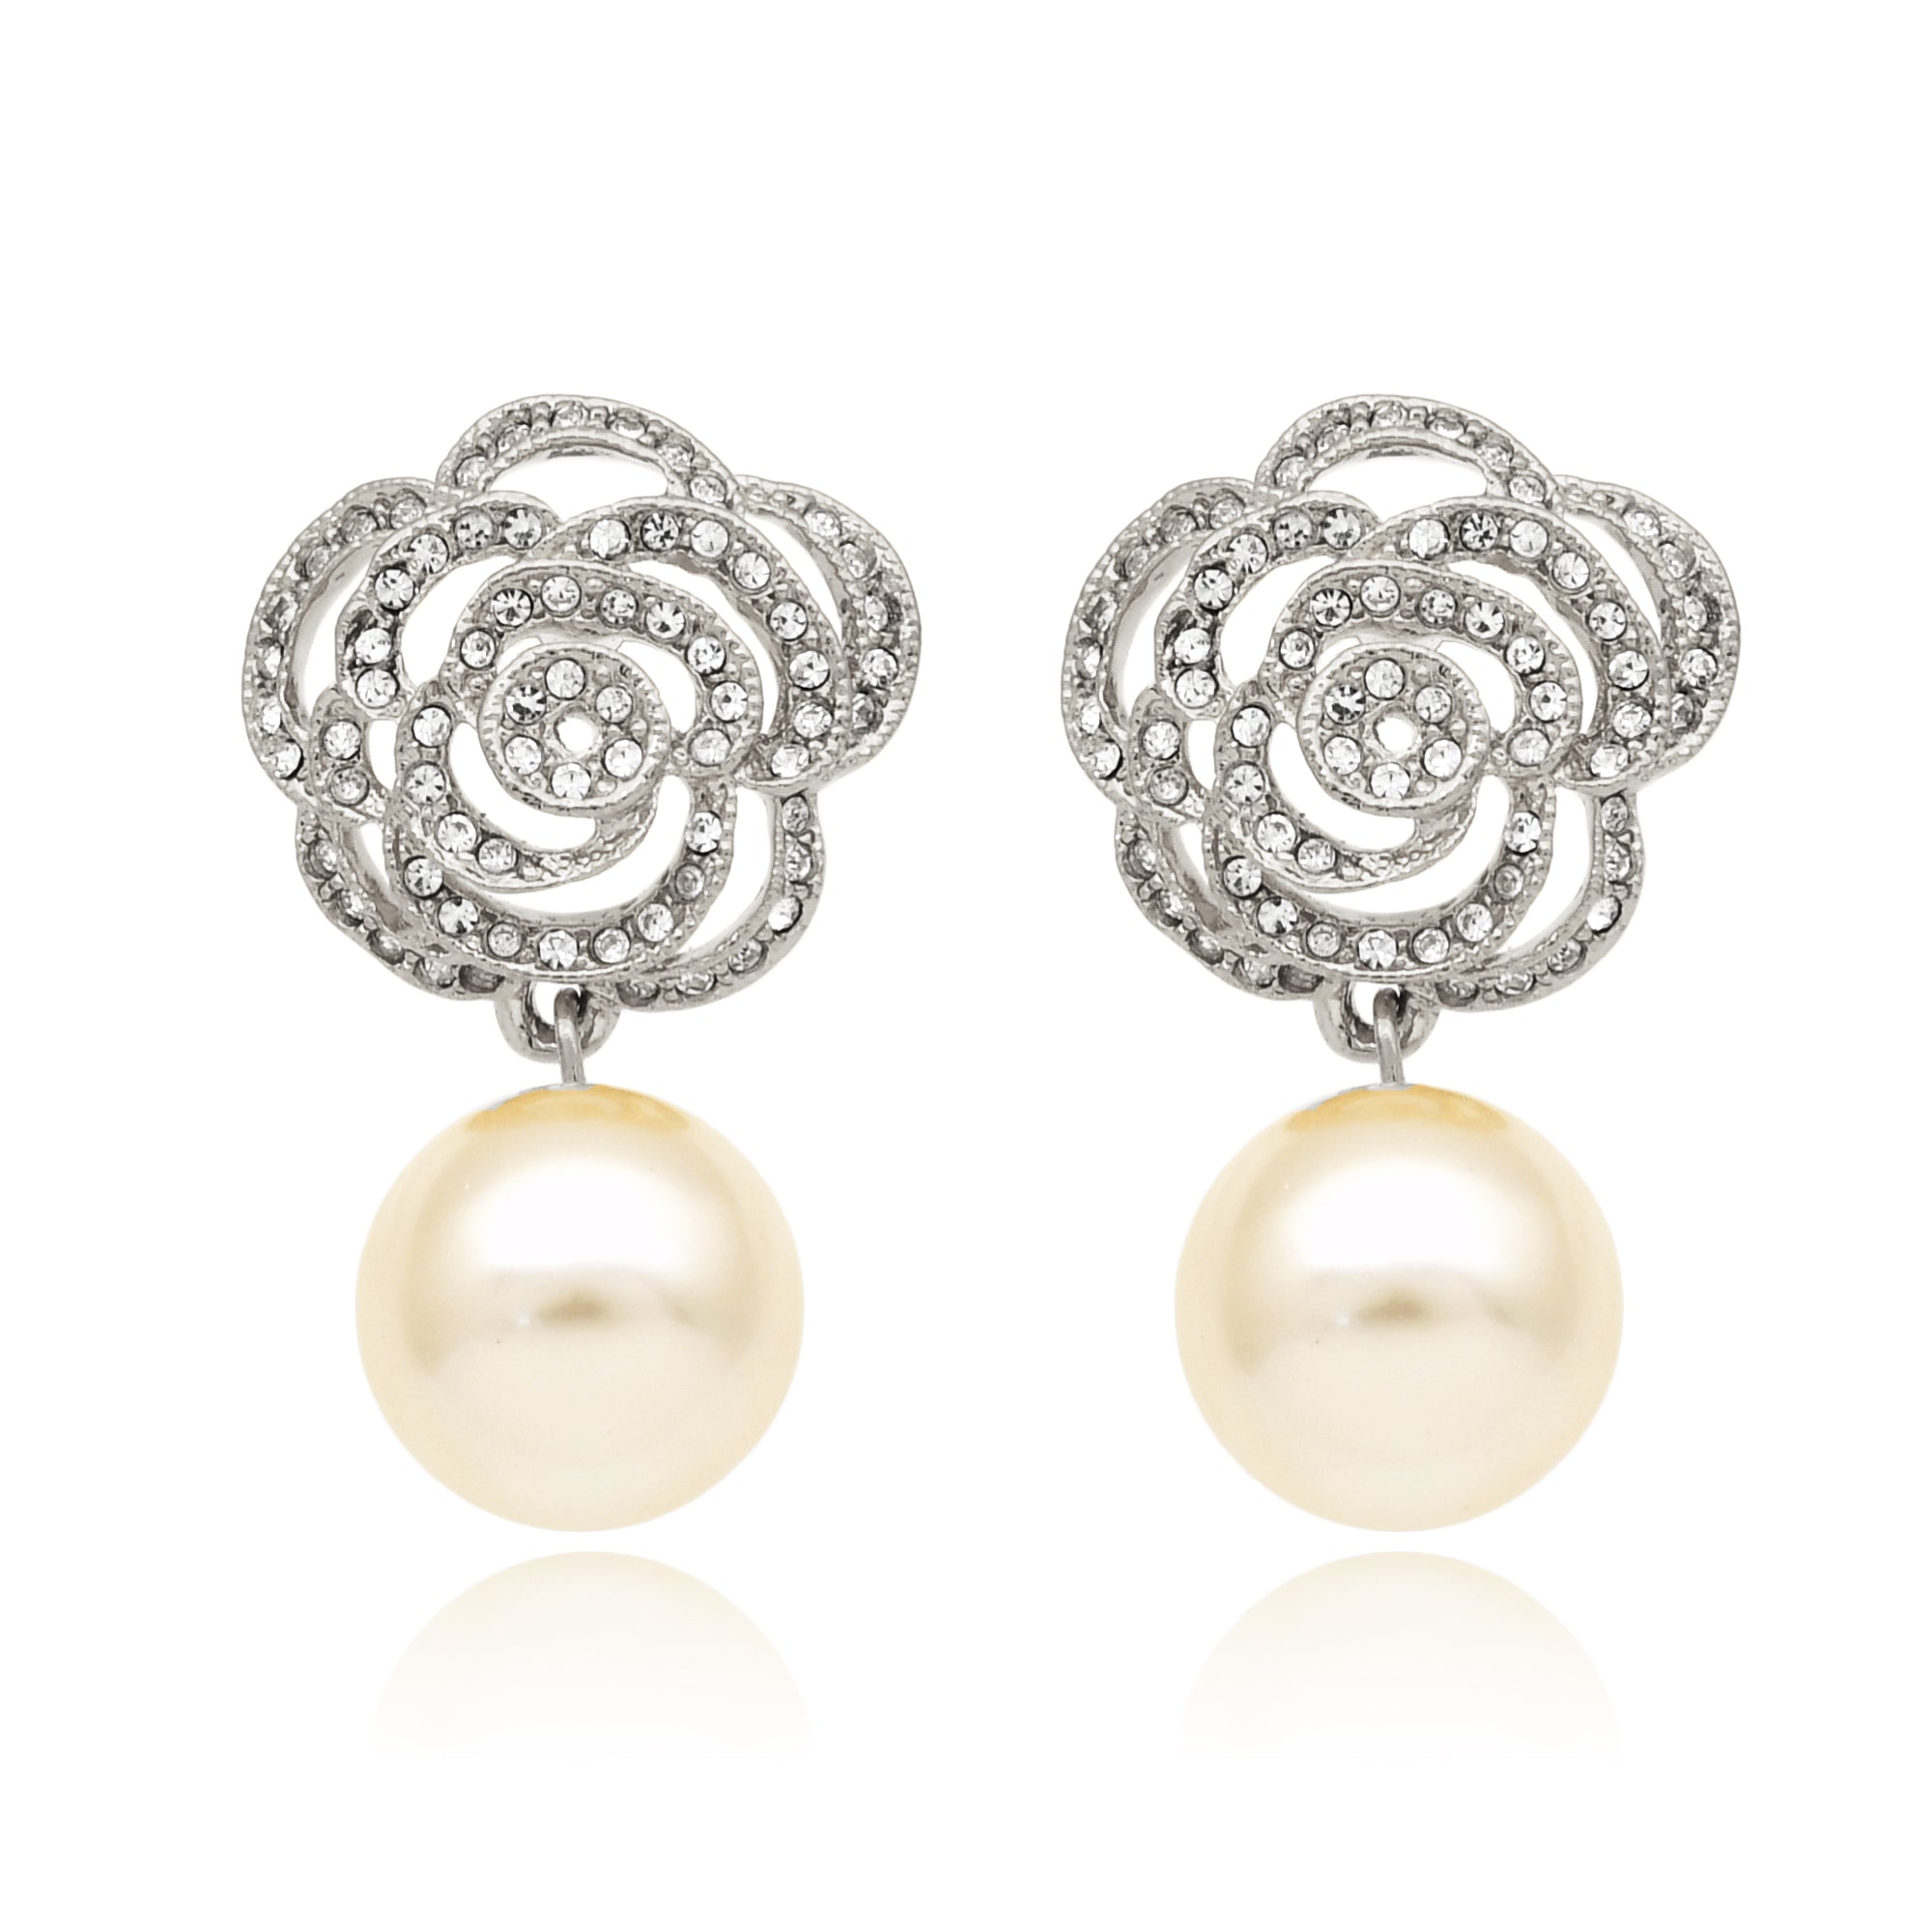 Duo parfum rose earrings